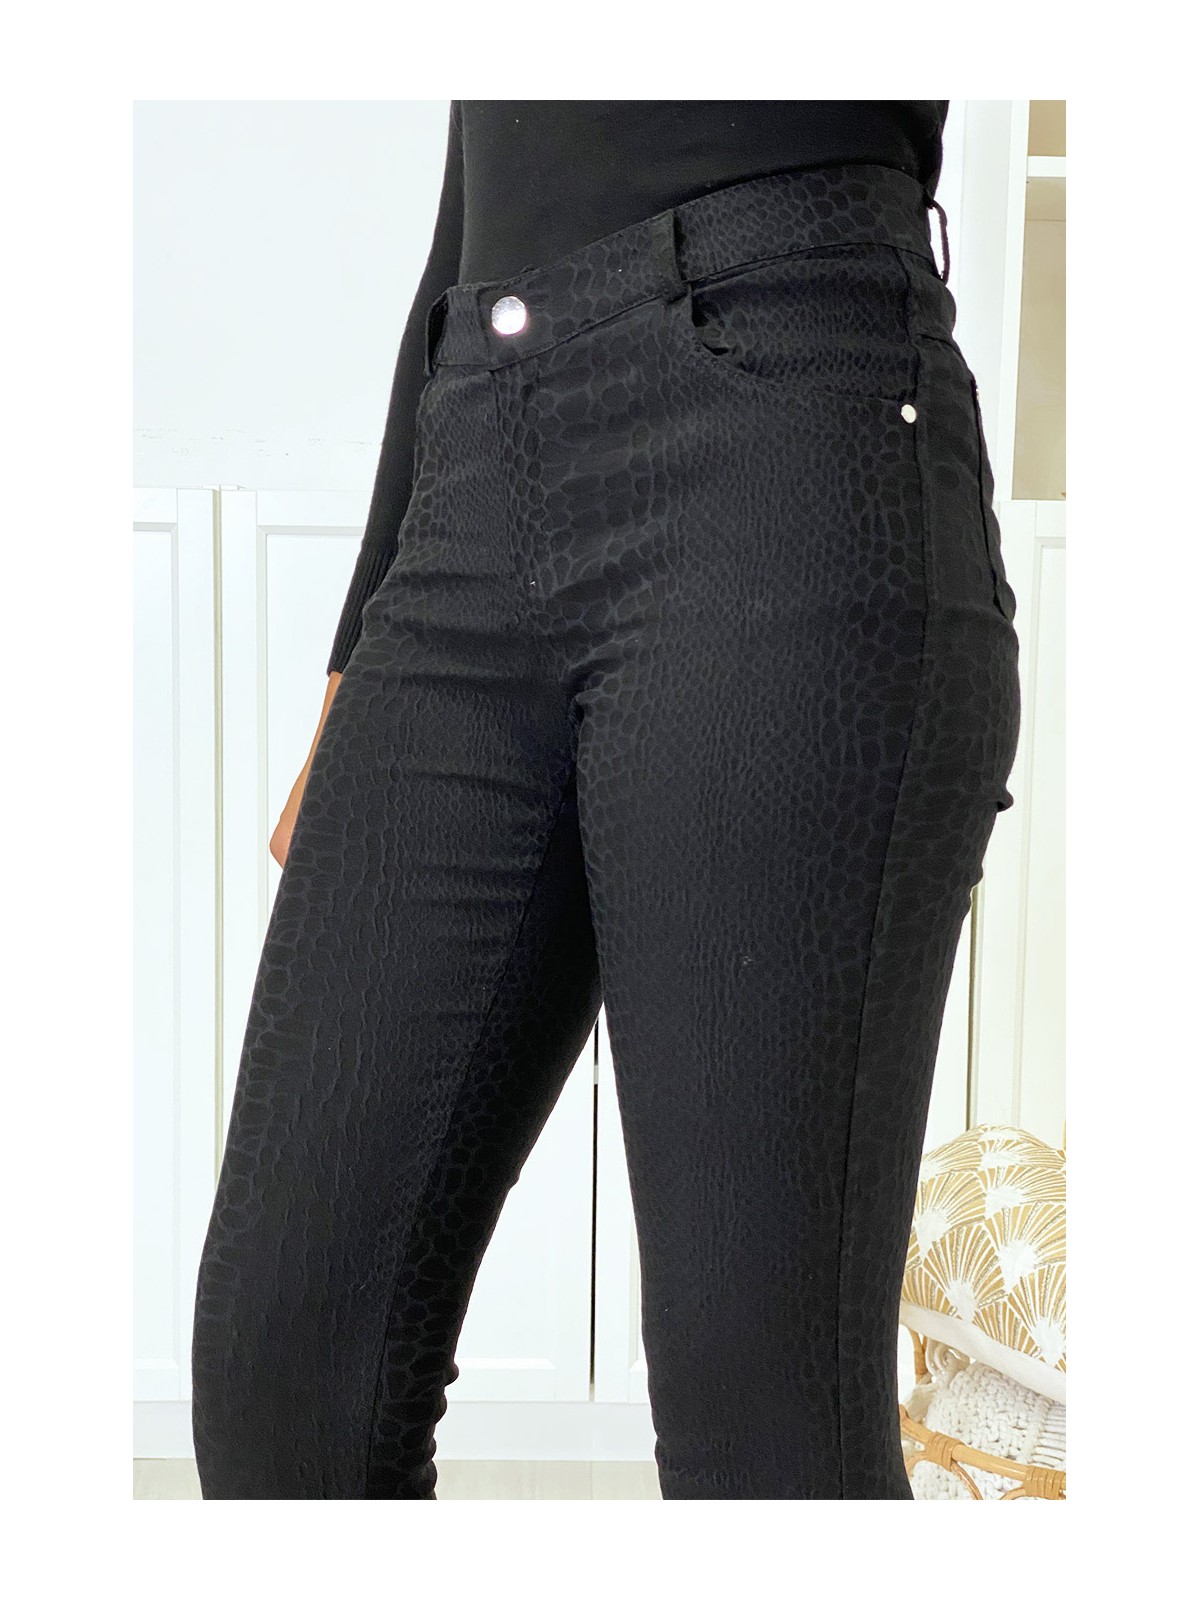 Pantalon slim noir motif python avec 5 poches - 5